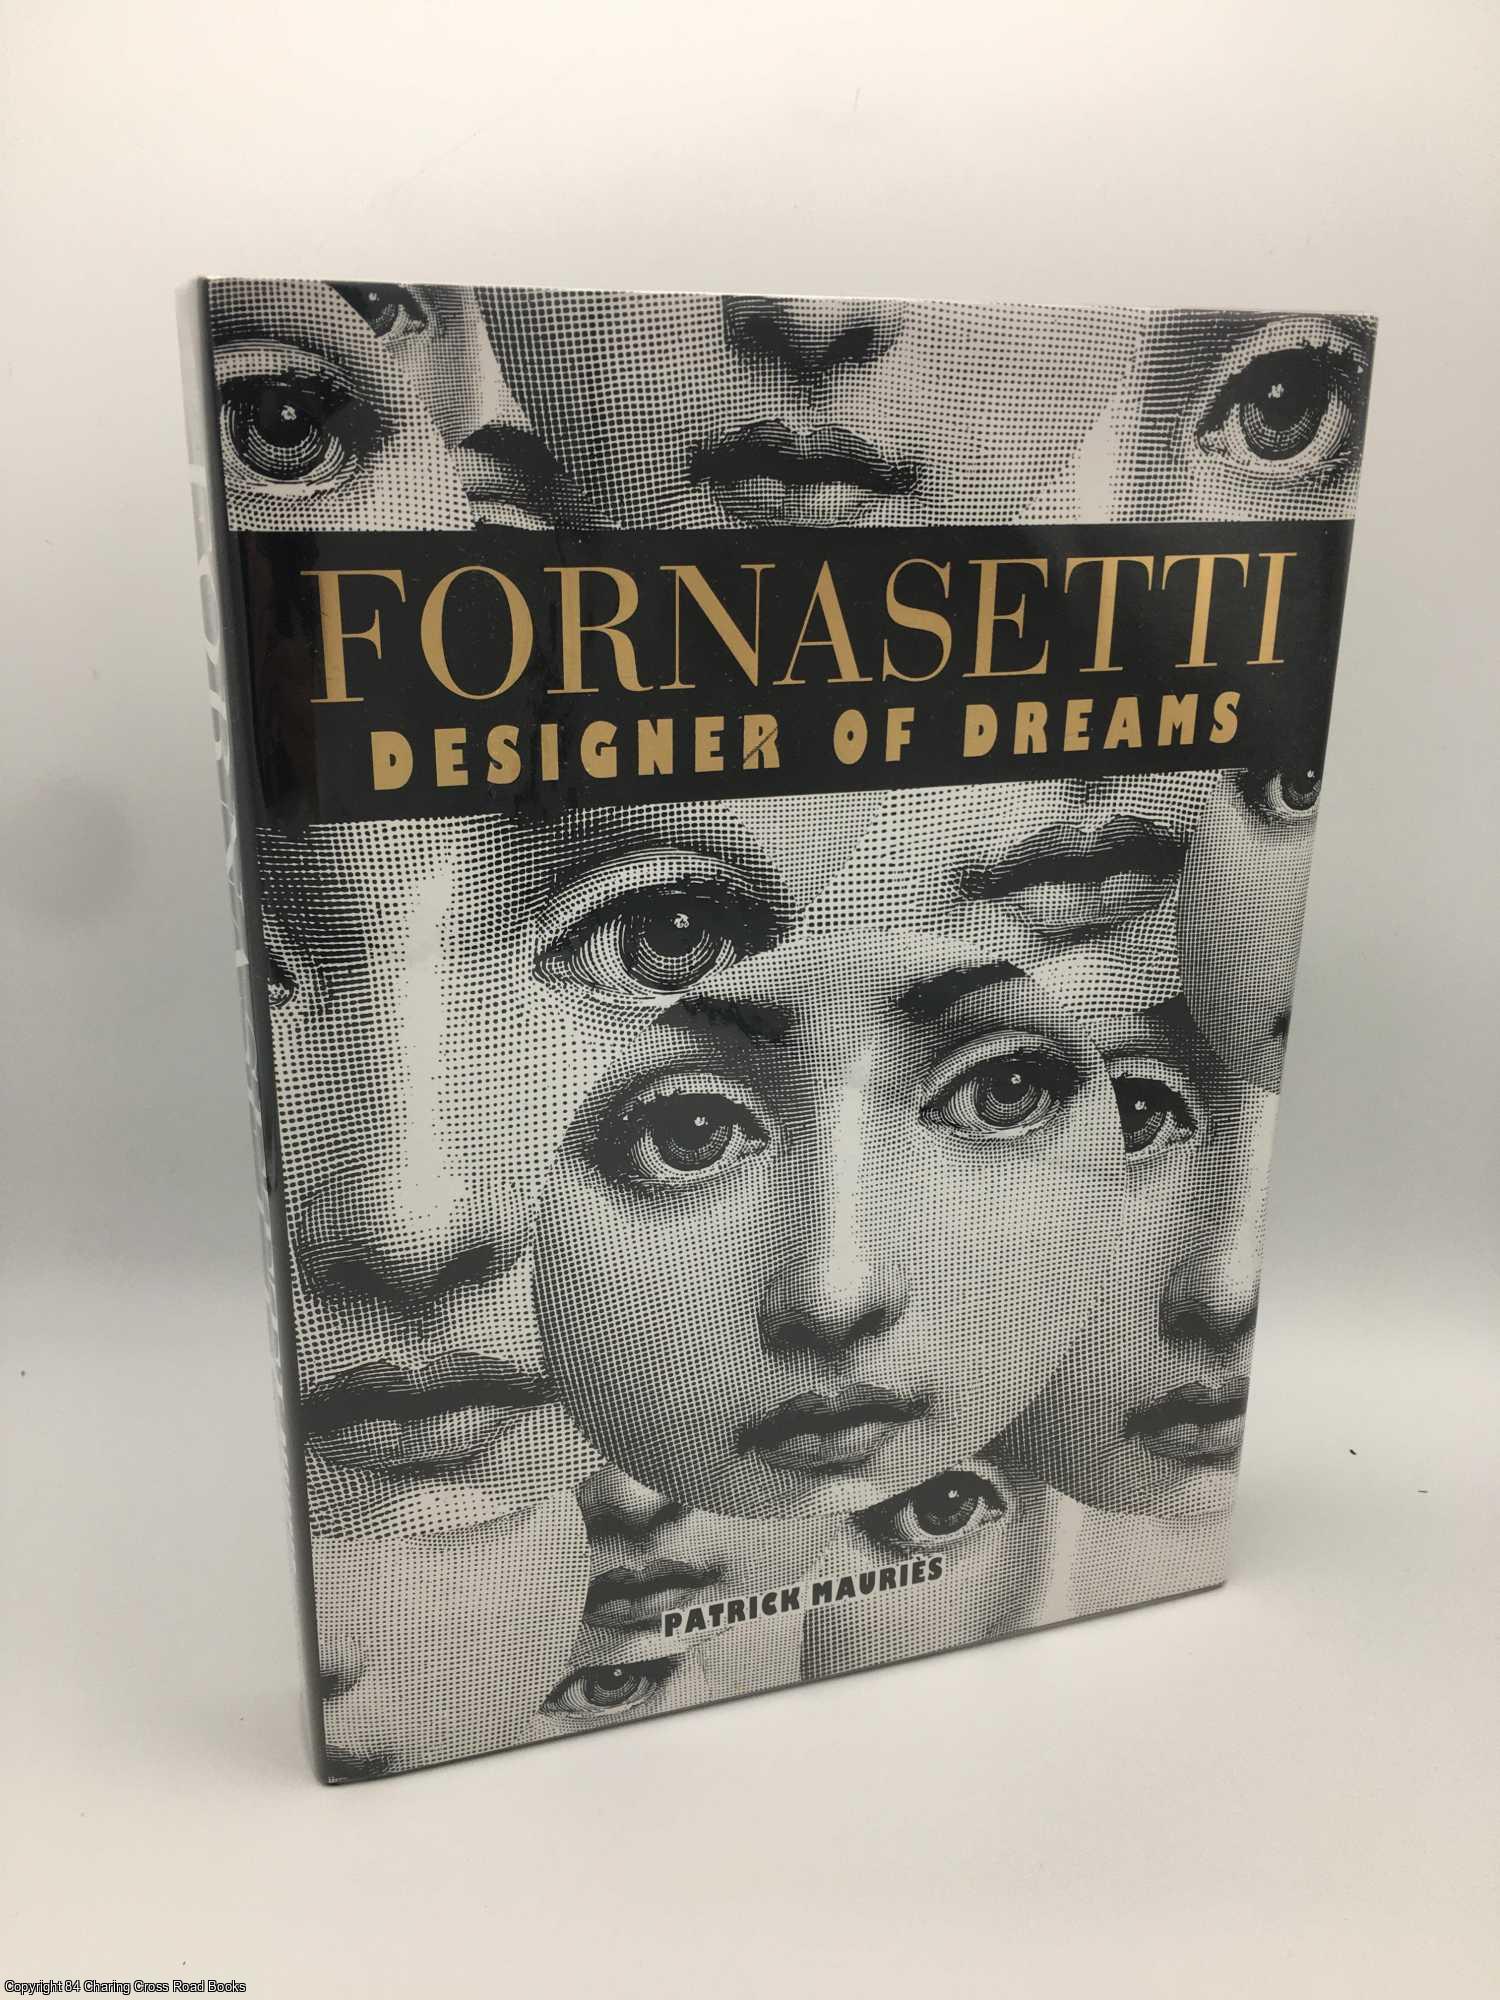 Mauries, Patrick - Fornasetti: Designer of Dreams